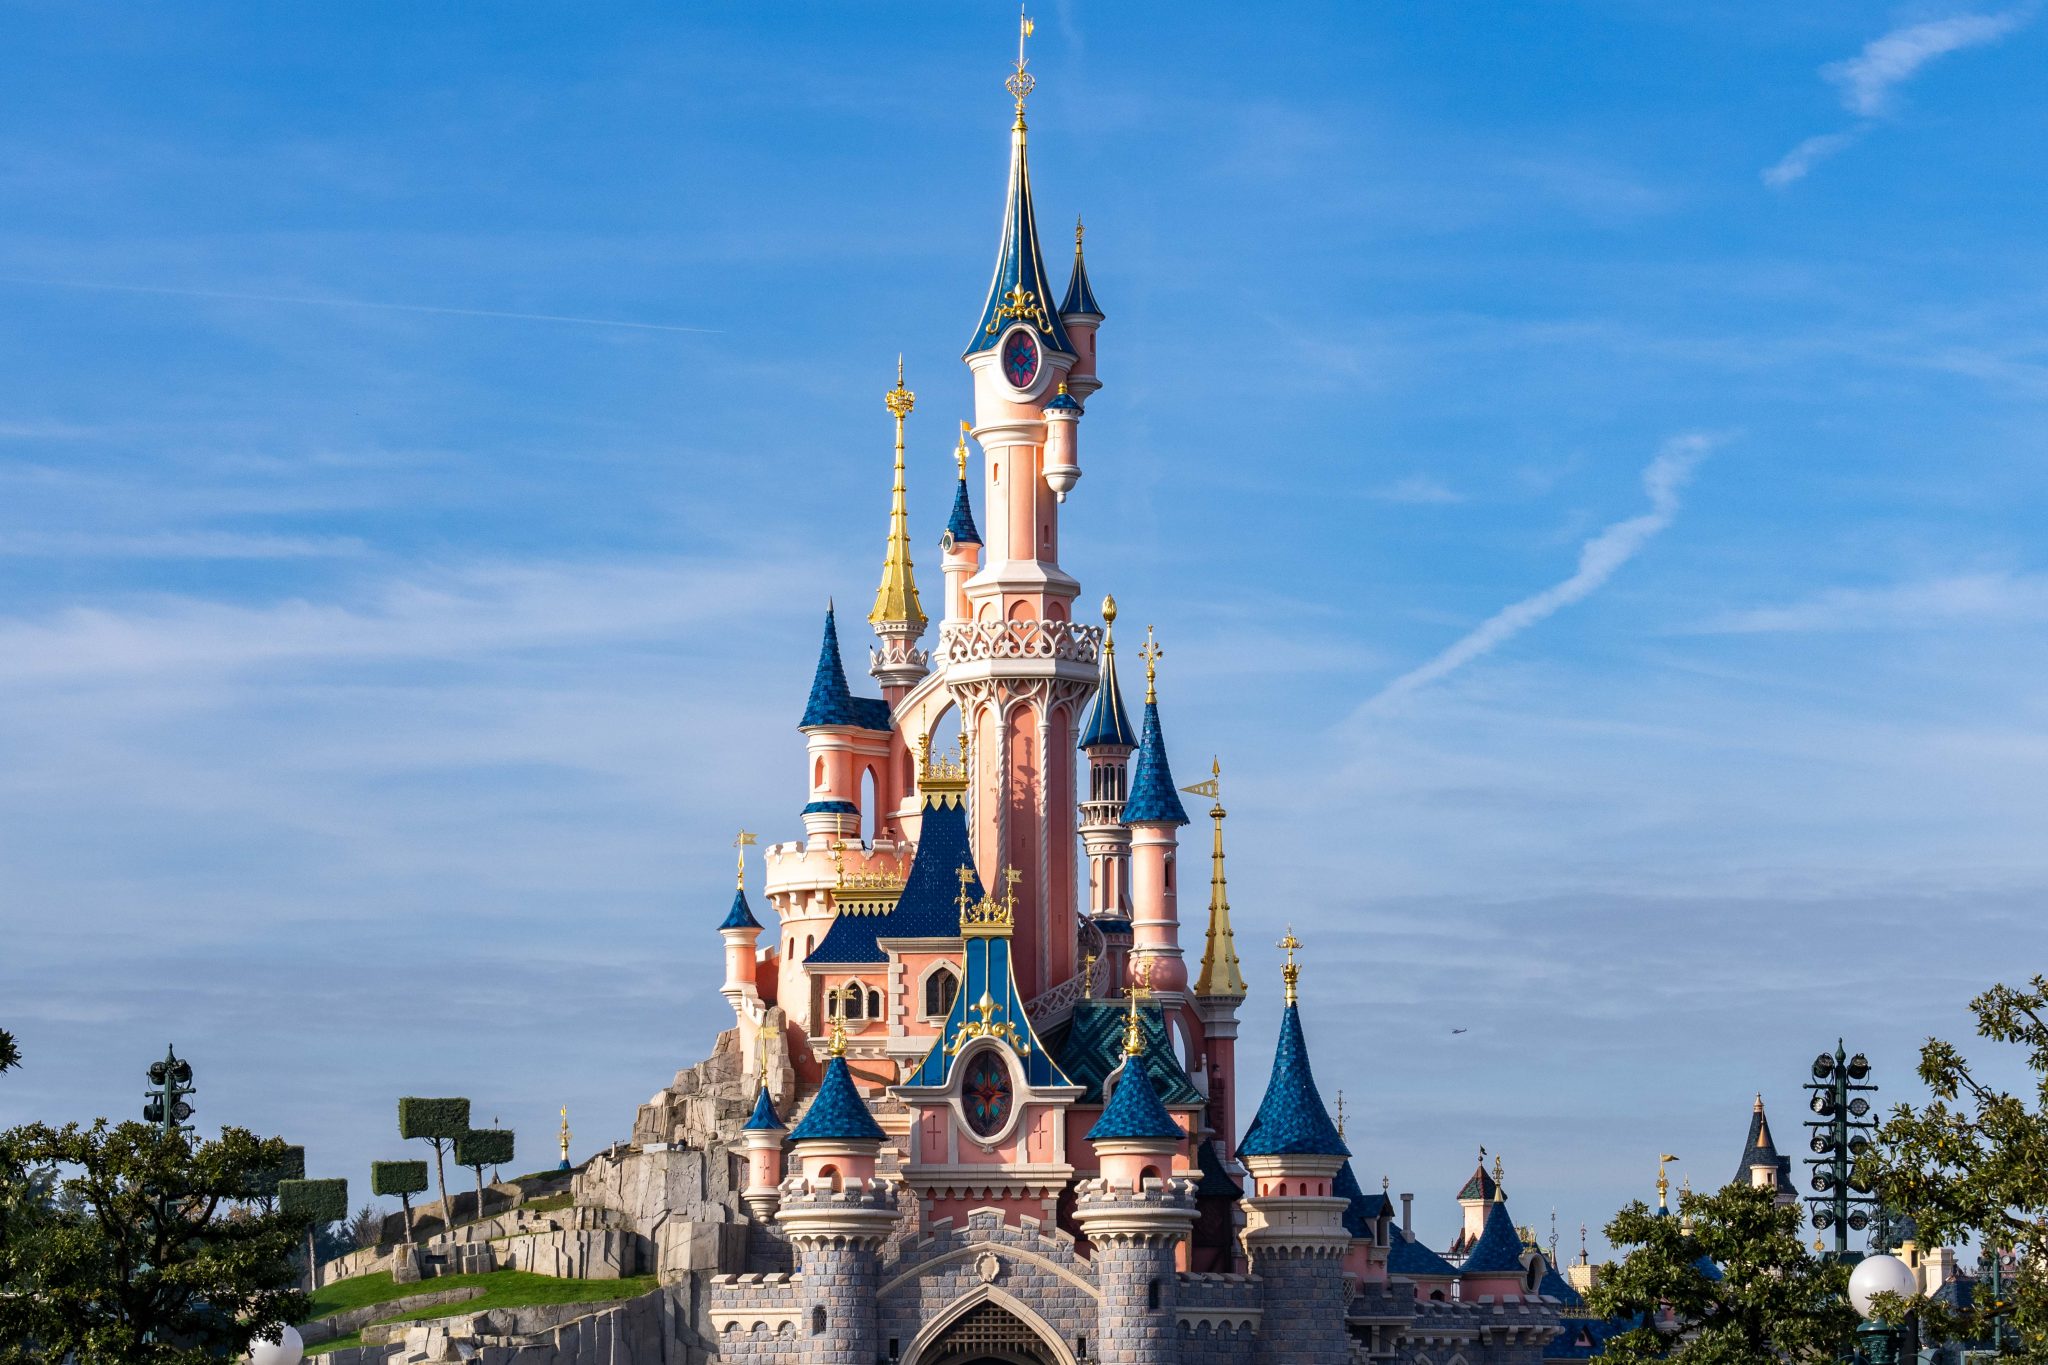 Sunrise at Sleeping Beauty's Castle, Disneyland Paris, #DisneyMagicMoments